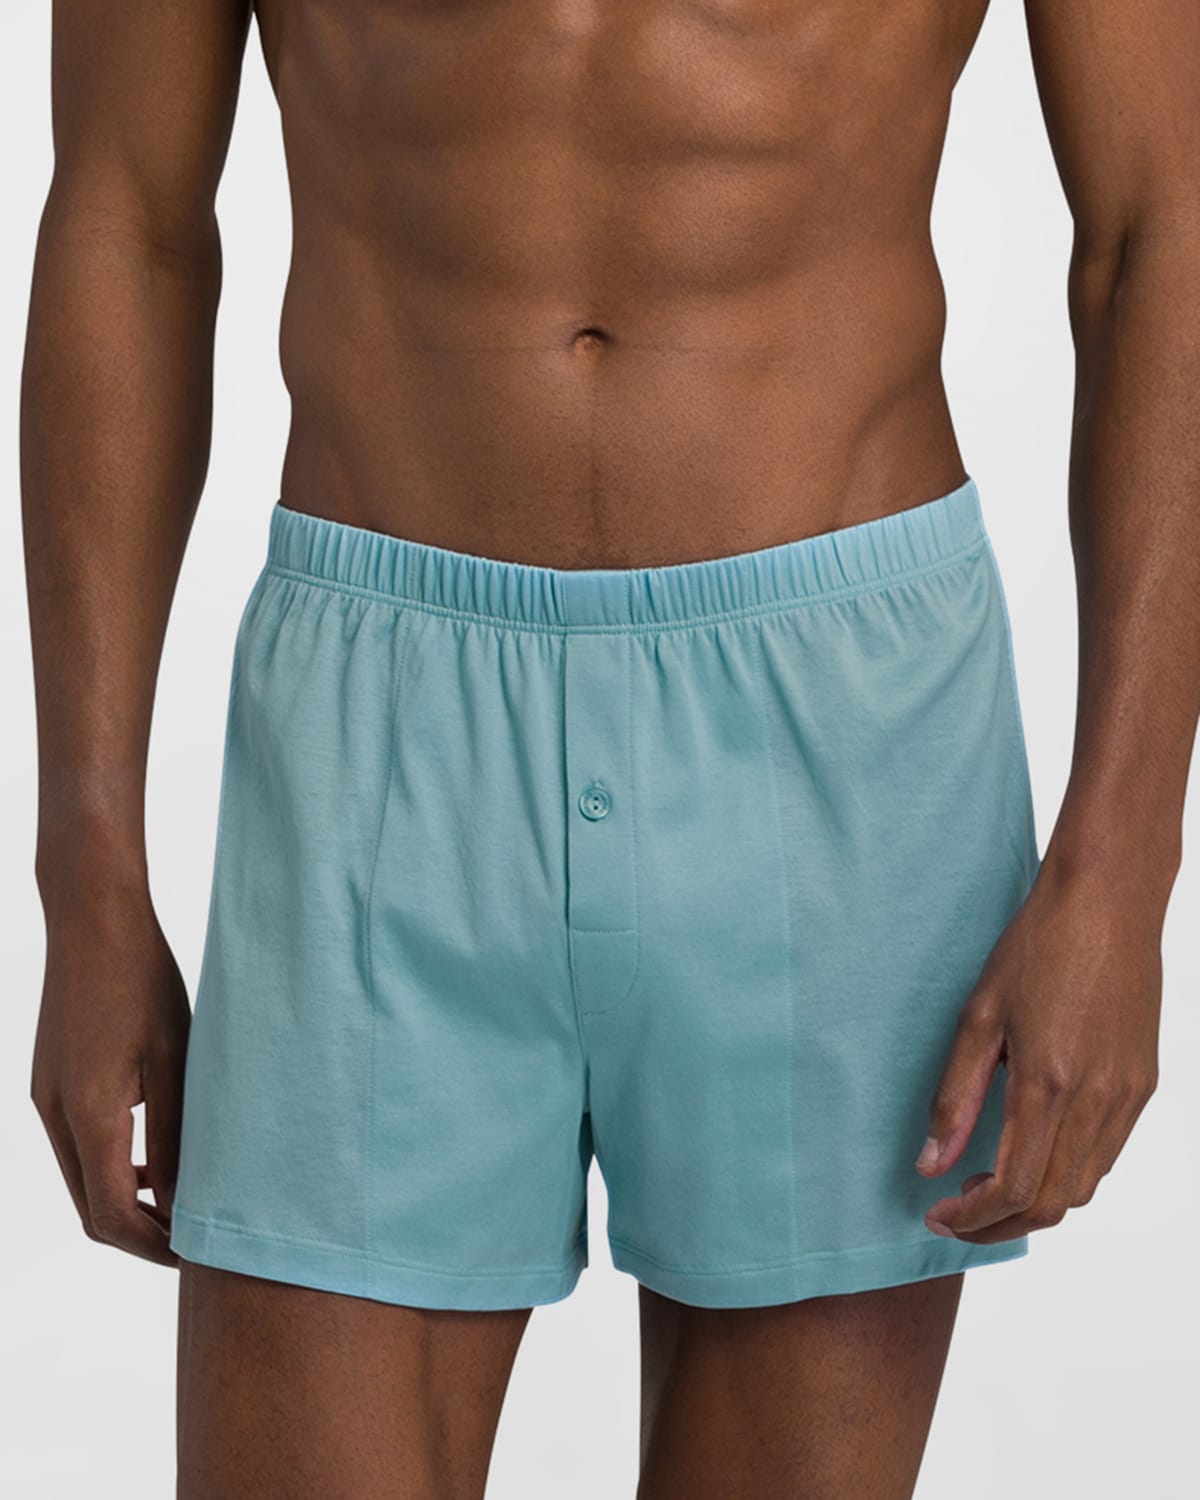 HANRO Sporty Mercerised Cotton Boxer Shorts for Men